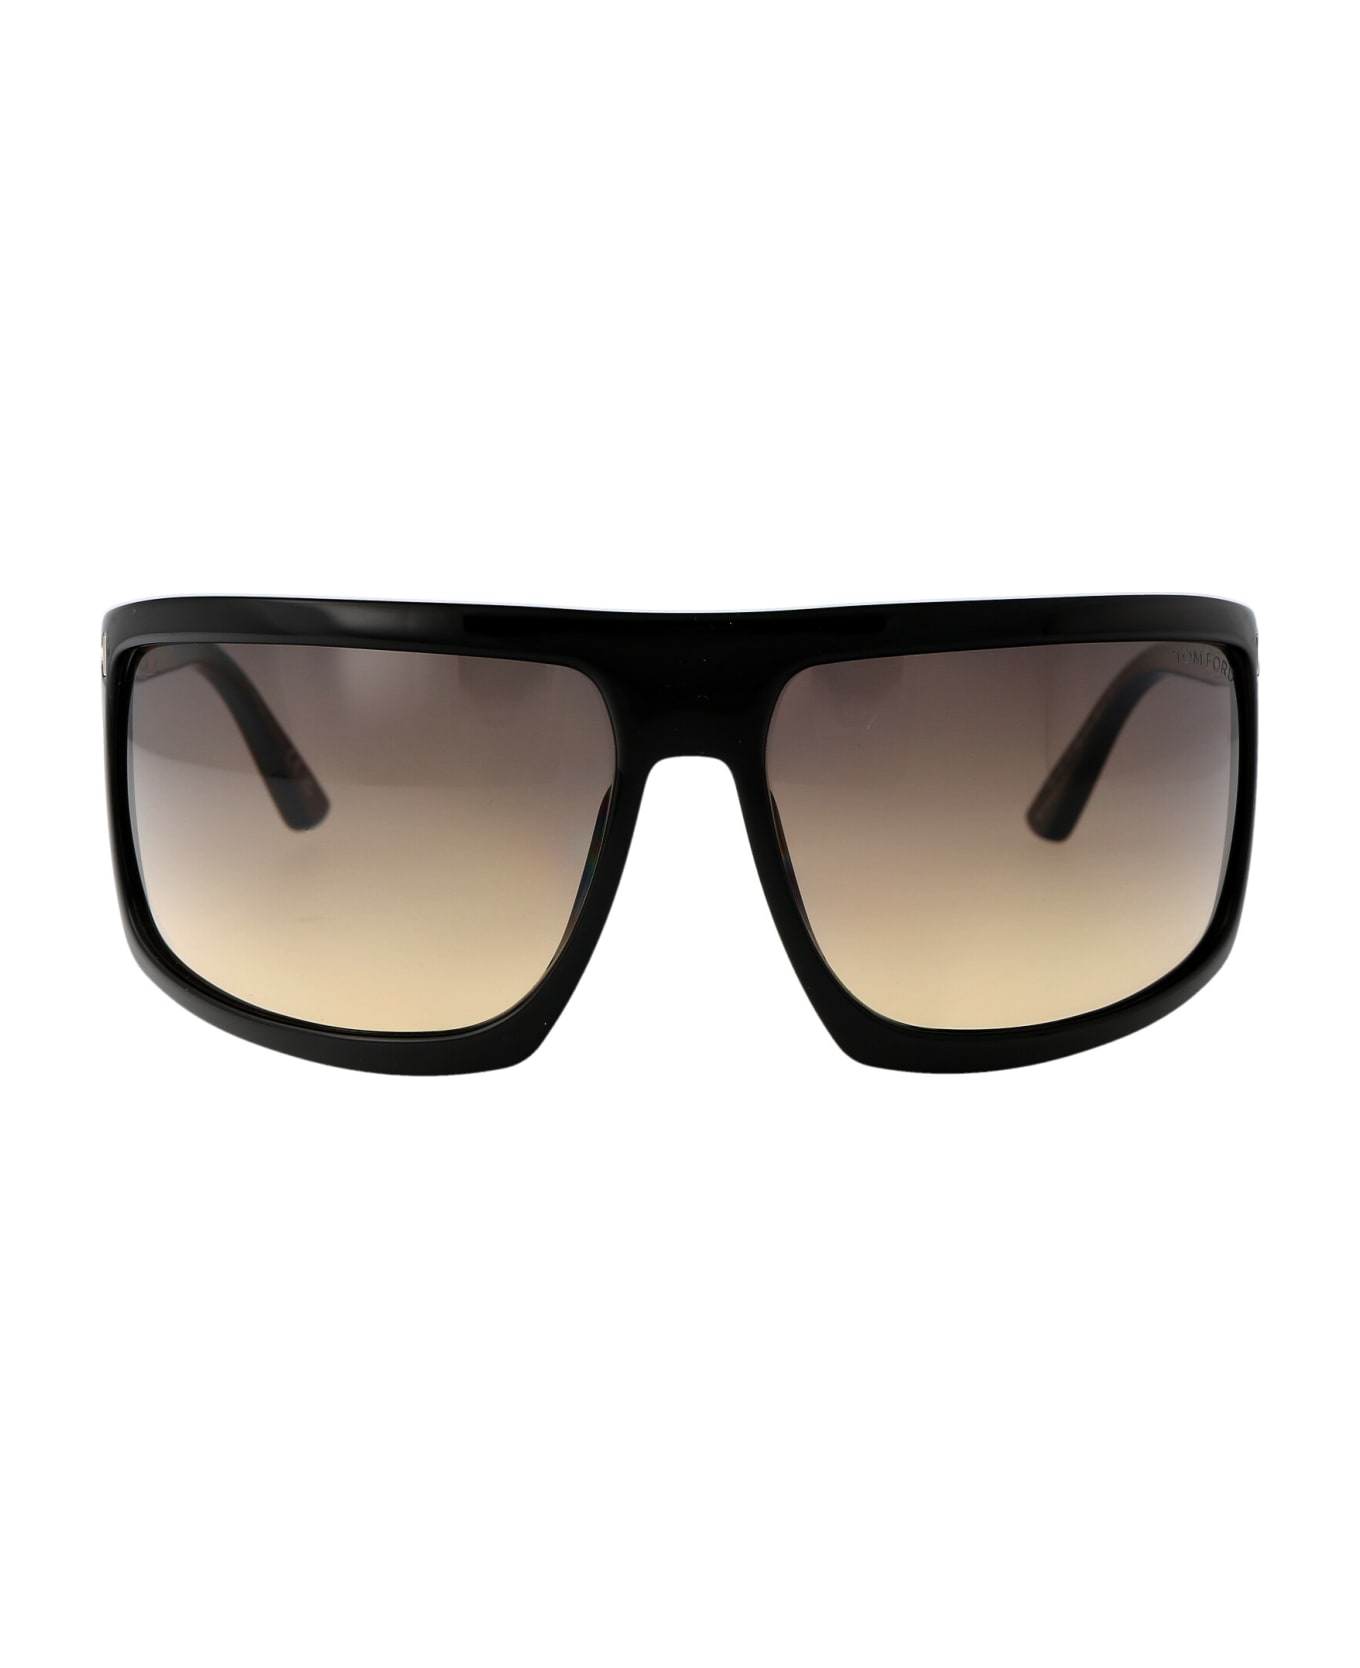 Tom Ford Eyewear Clint-02 Sunglasses - 01B Nero Lucido / Fumo Grad サングラス